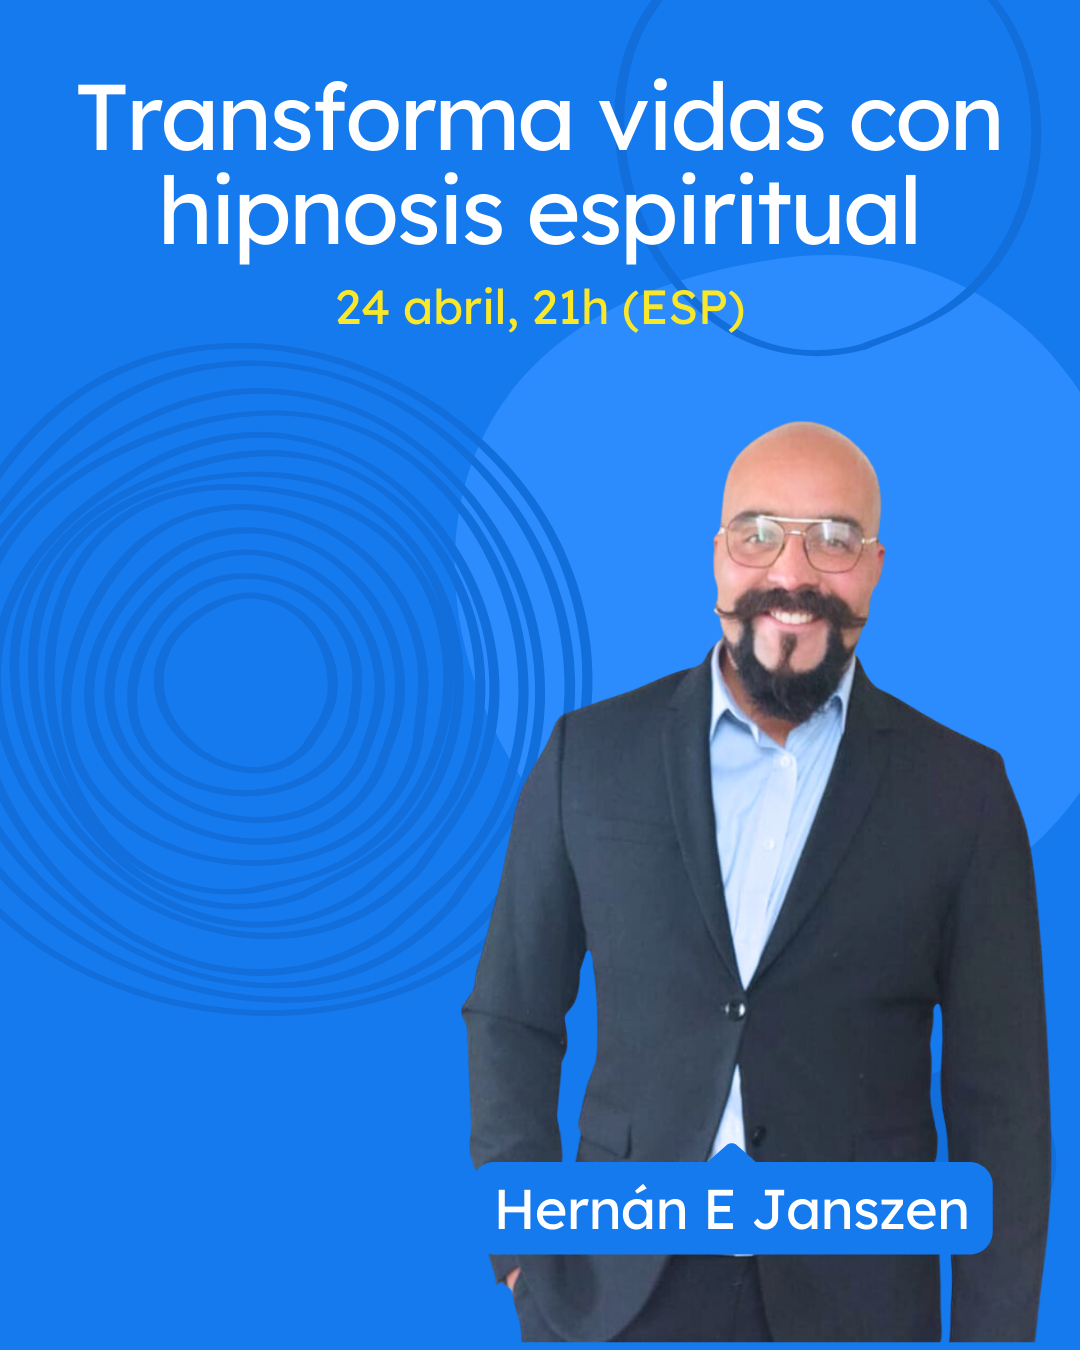 hipnosis espiritual webinar grautito. hernan e janszen. un ser zen